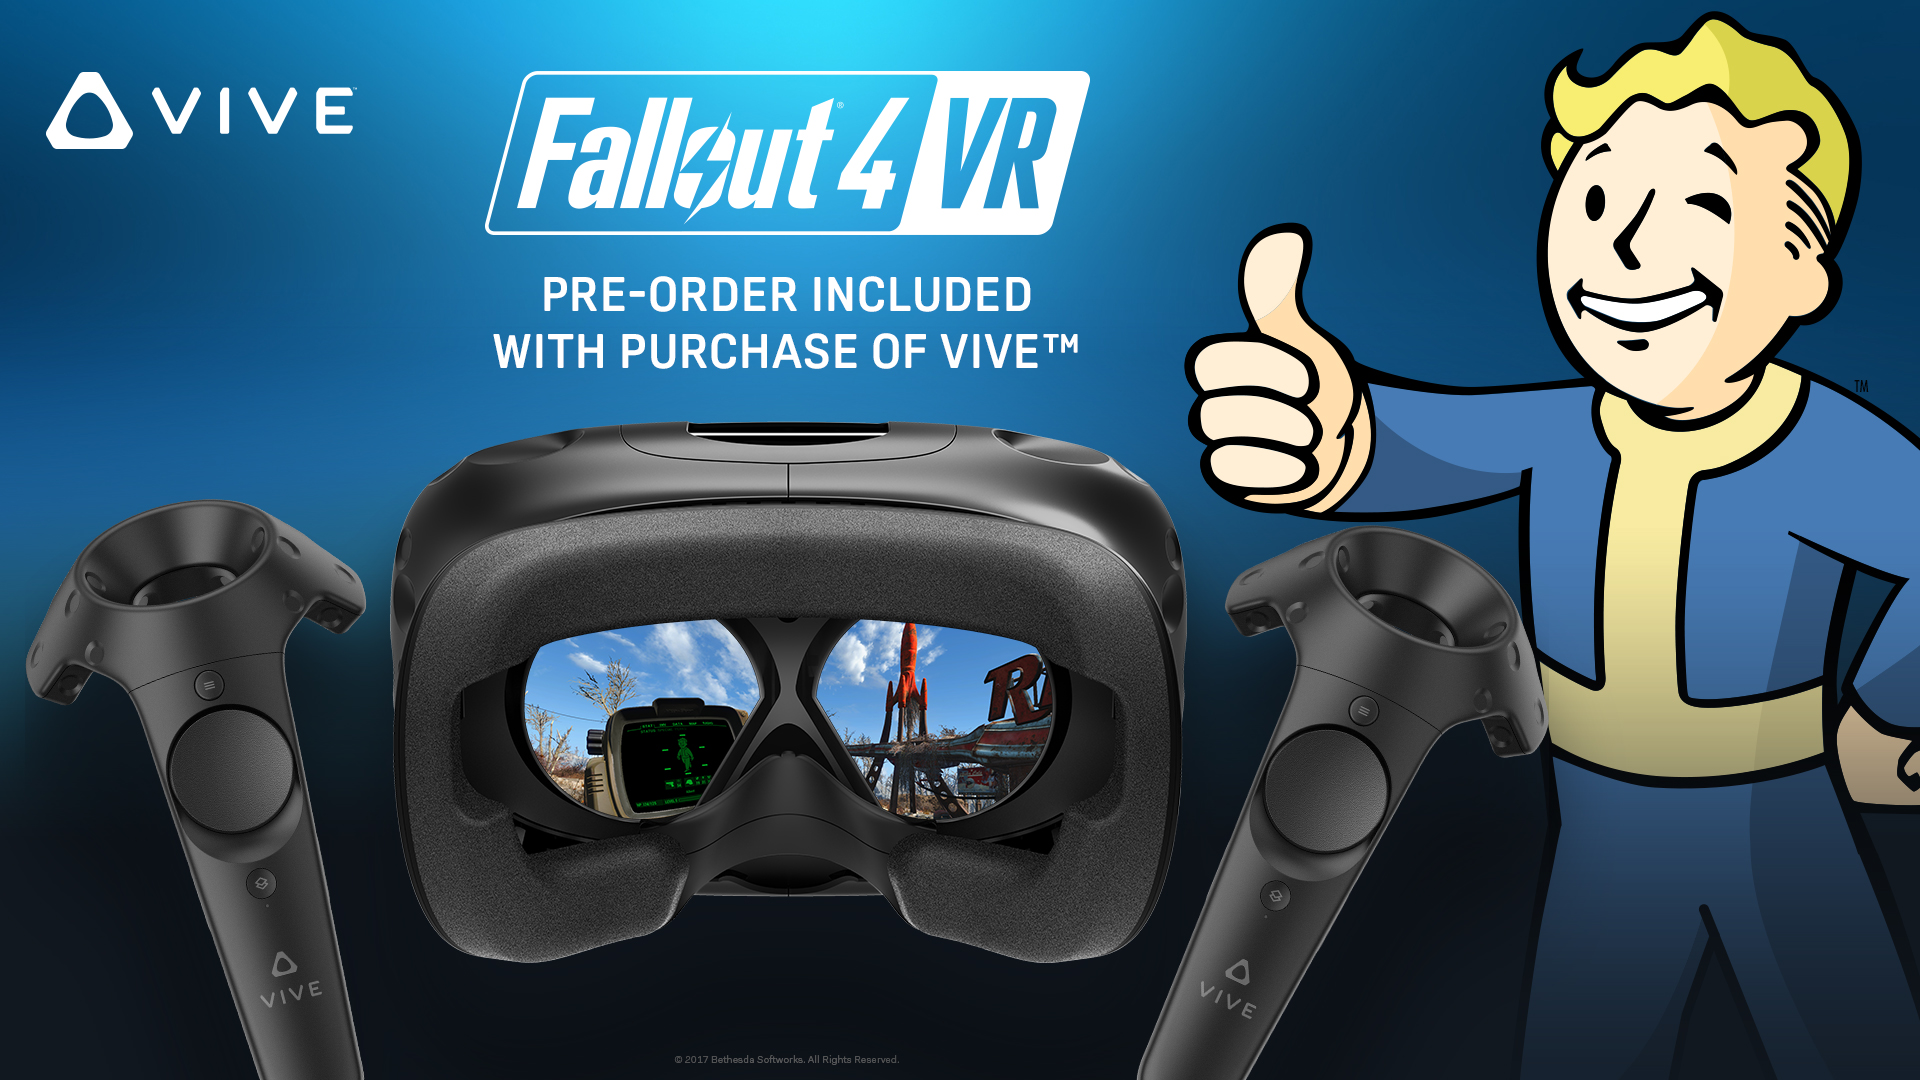 Mau Fallout 4 VR Gratis? Beli HTC Vive Sekarang!